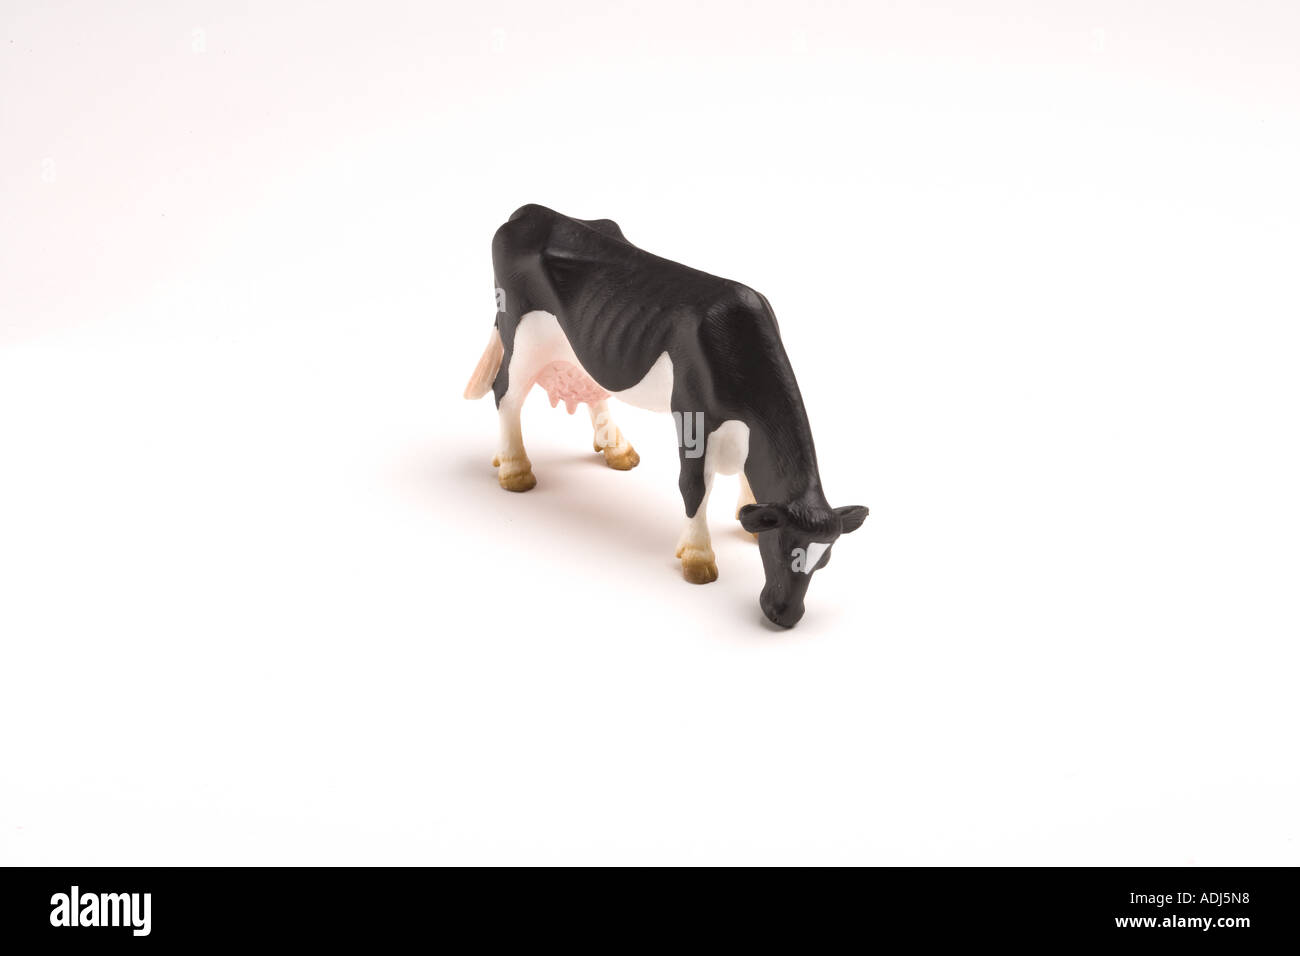 Miniature toy cow Stock Photo